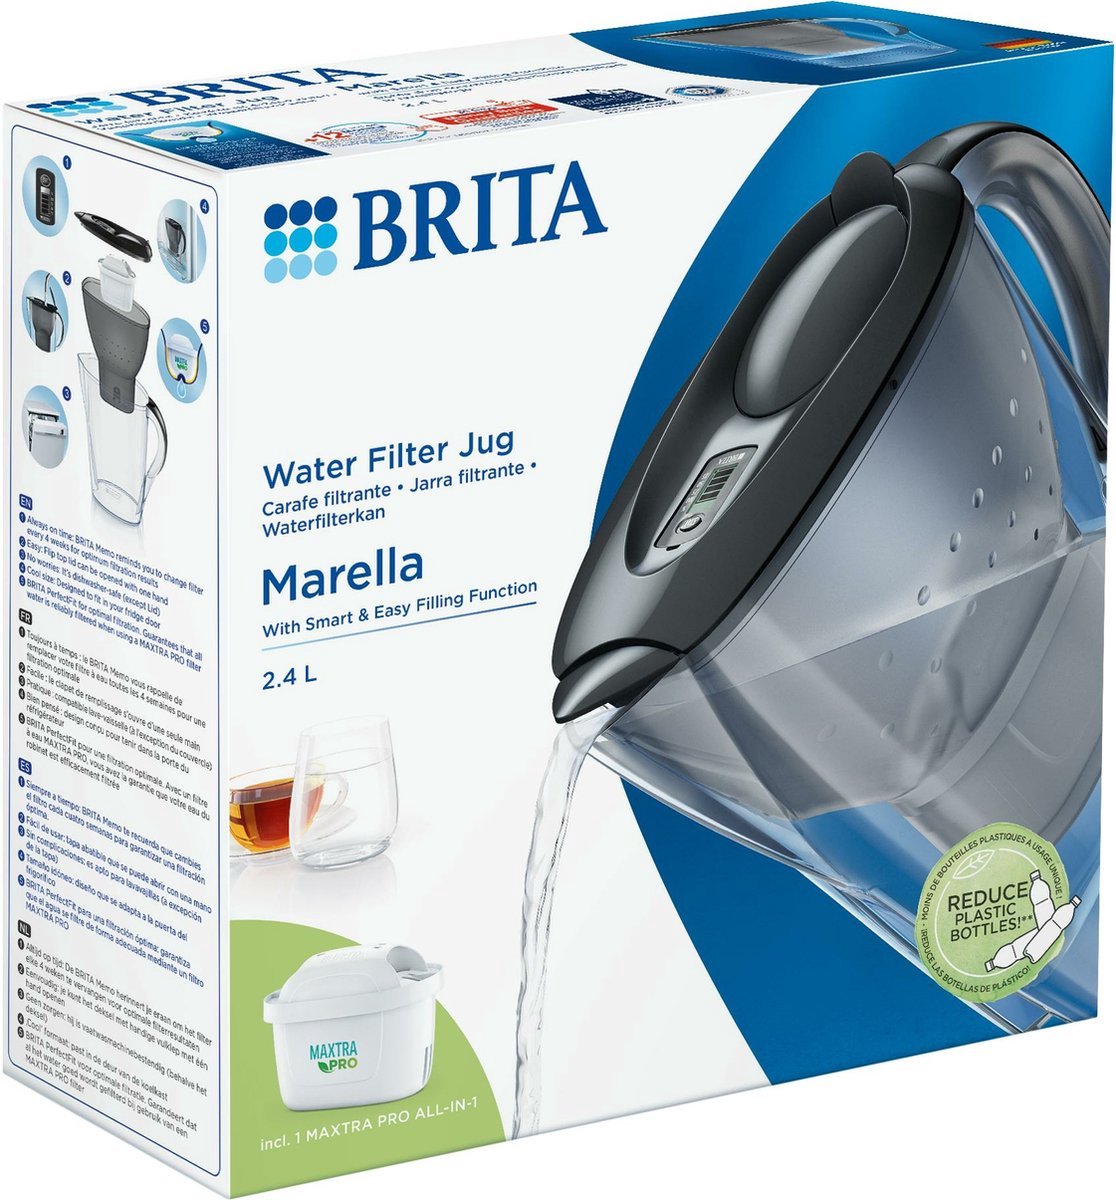 Brita - Cartouche filtrante BRITA maxtra pro expert anti tartre pack de 2